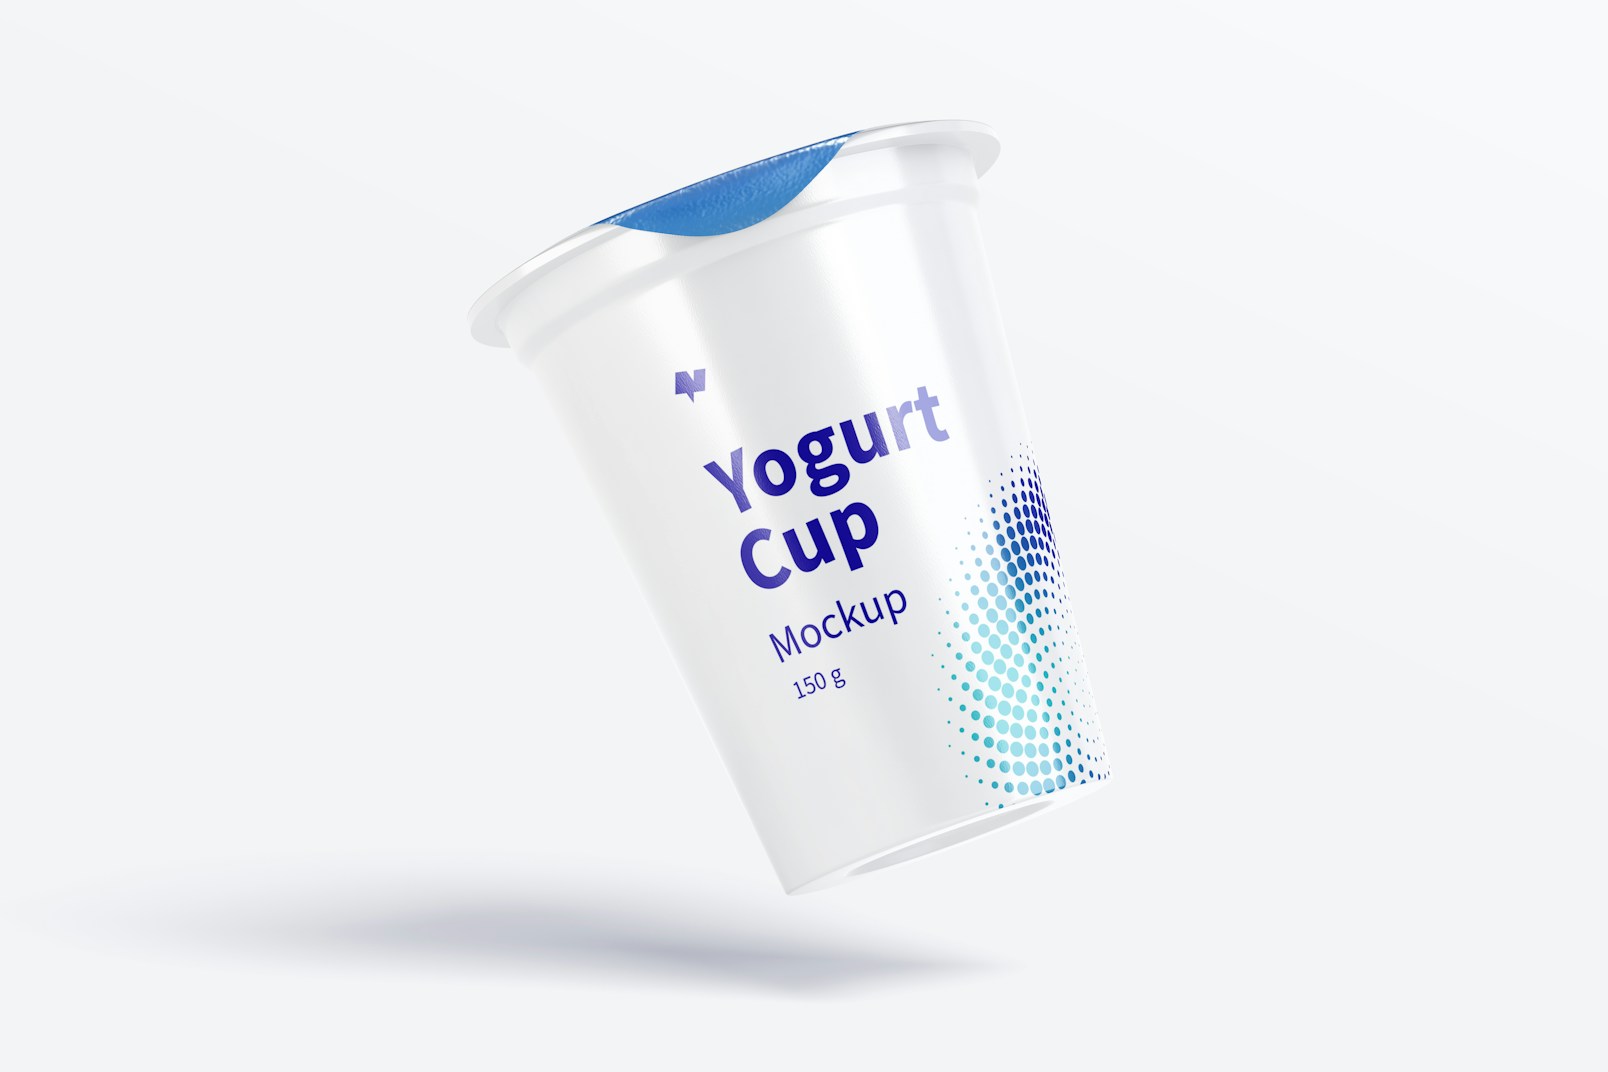 Maqueta de Vaso de Yogurt de 150 g, Flotando